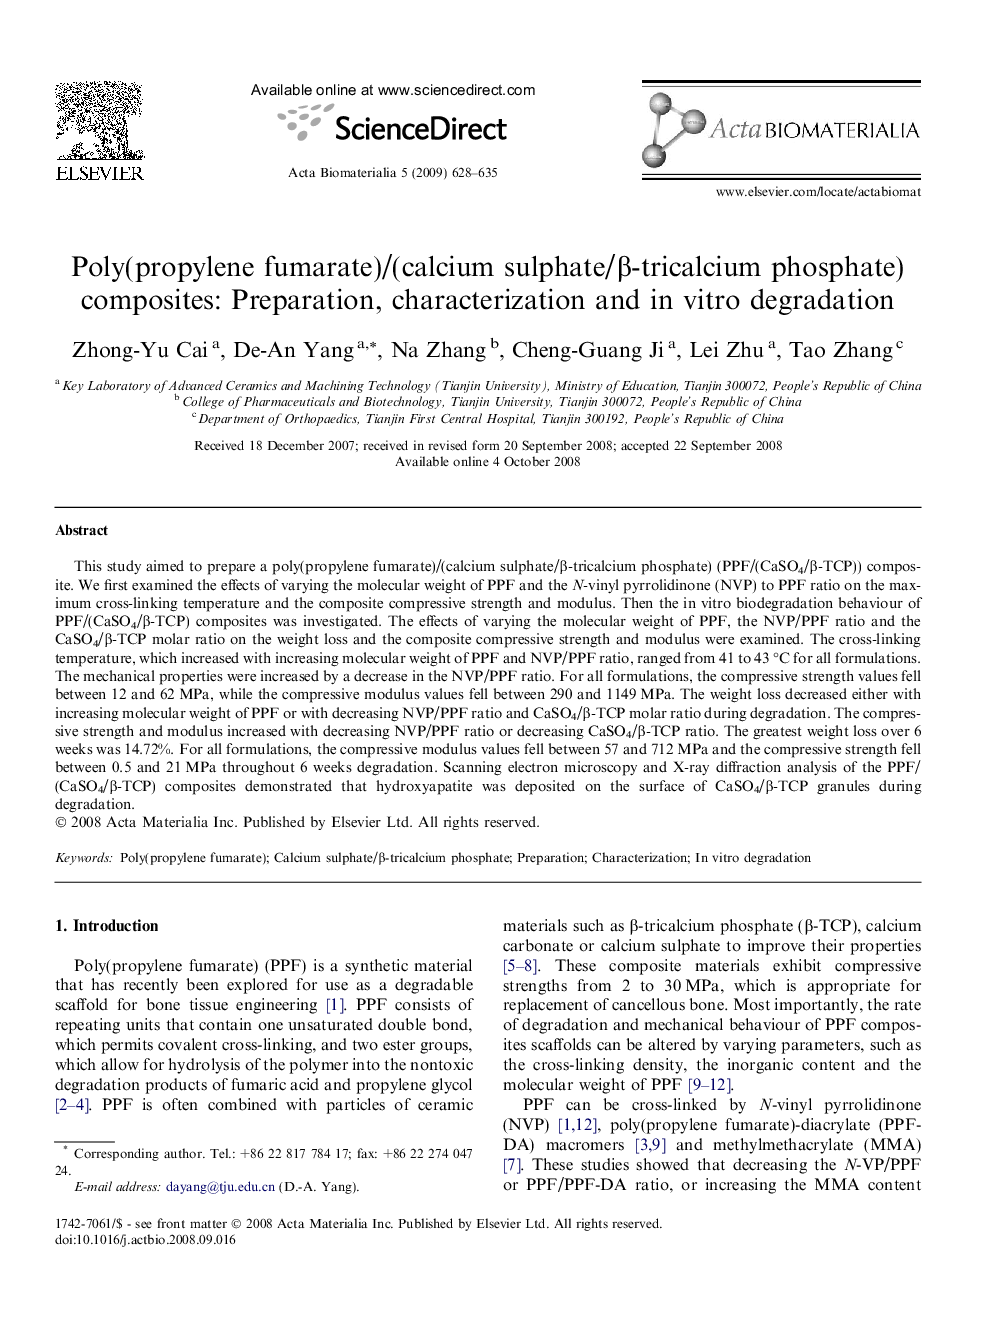 Poly(propylene fumarate)/(calcium sulphate/β-tricalcium phosphate) composites: Preparation, characterization and in vitro degradation